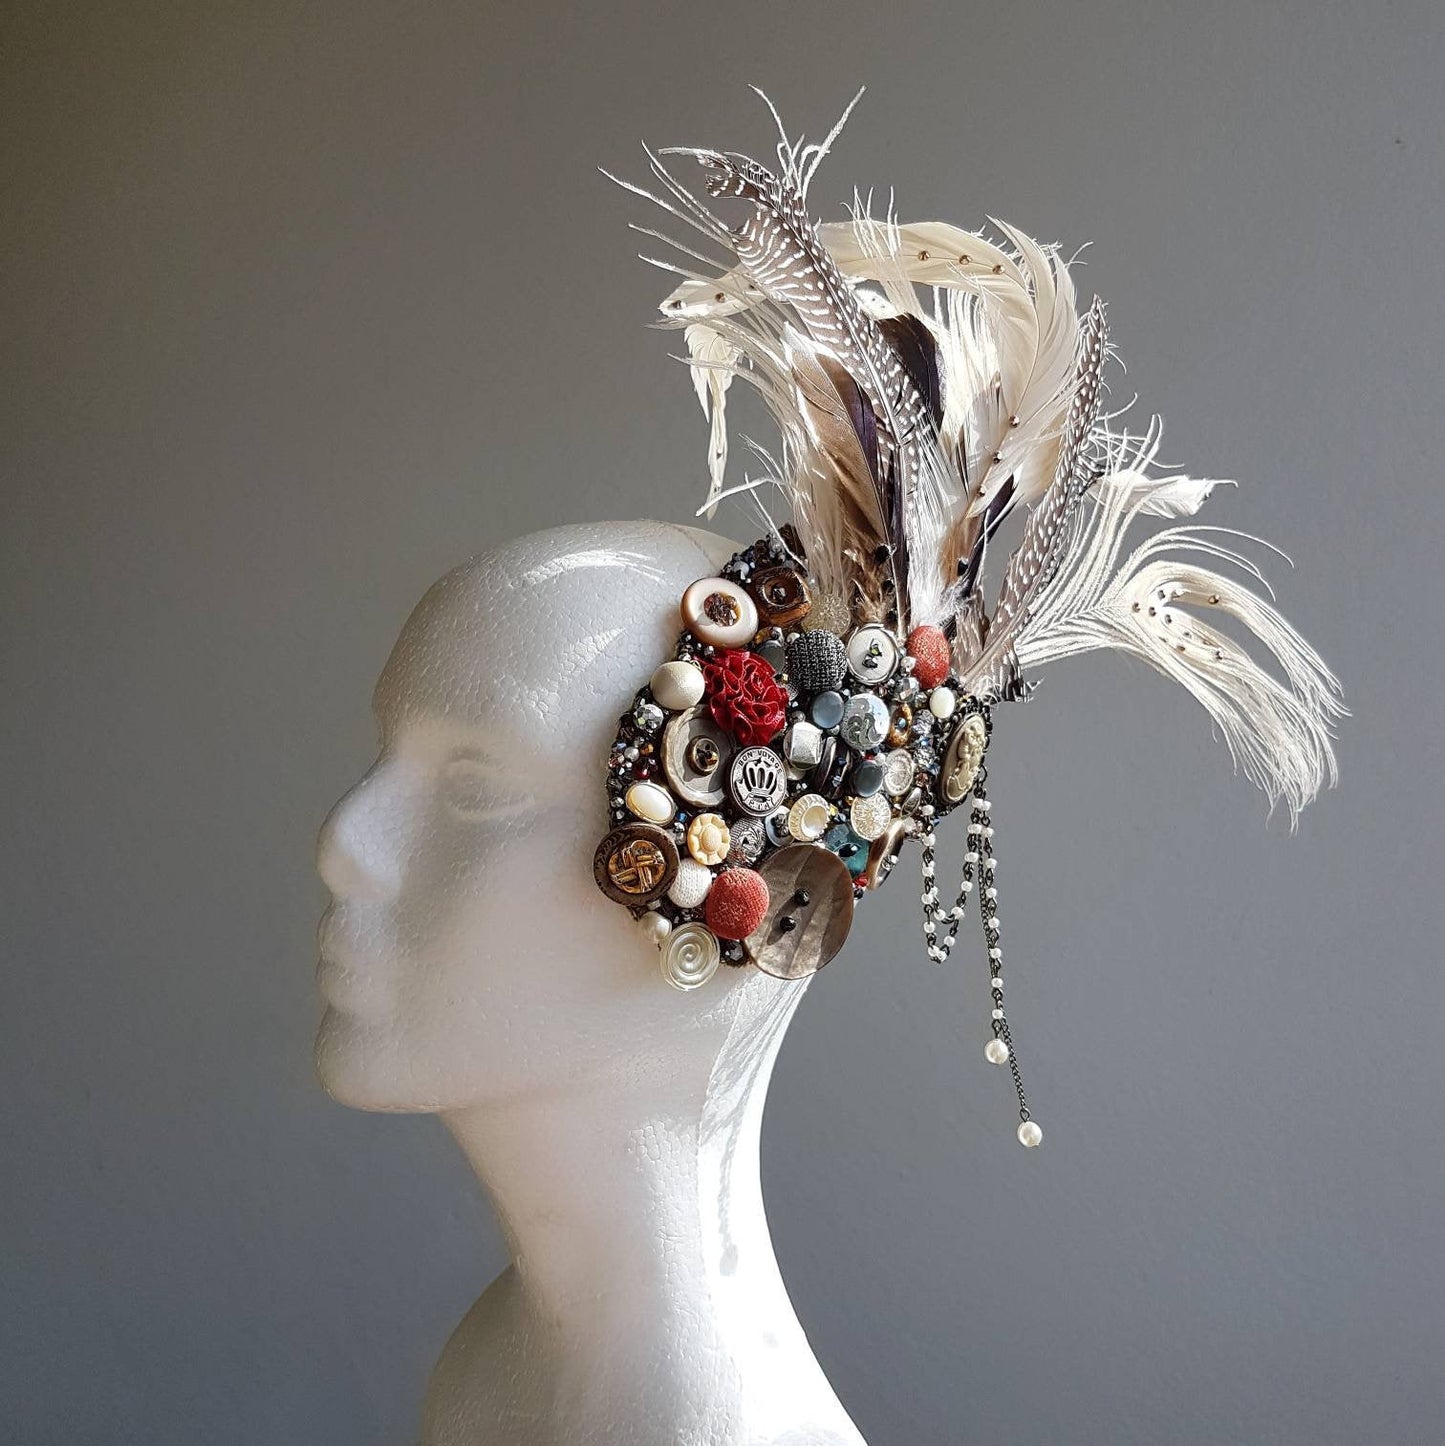 Harlequin Collection: The Harlequin Bon Voyage bridal hair ornament